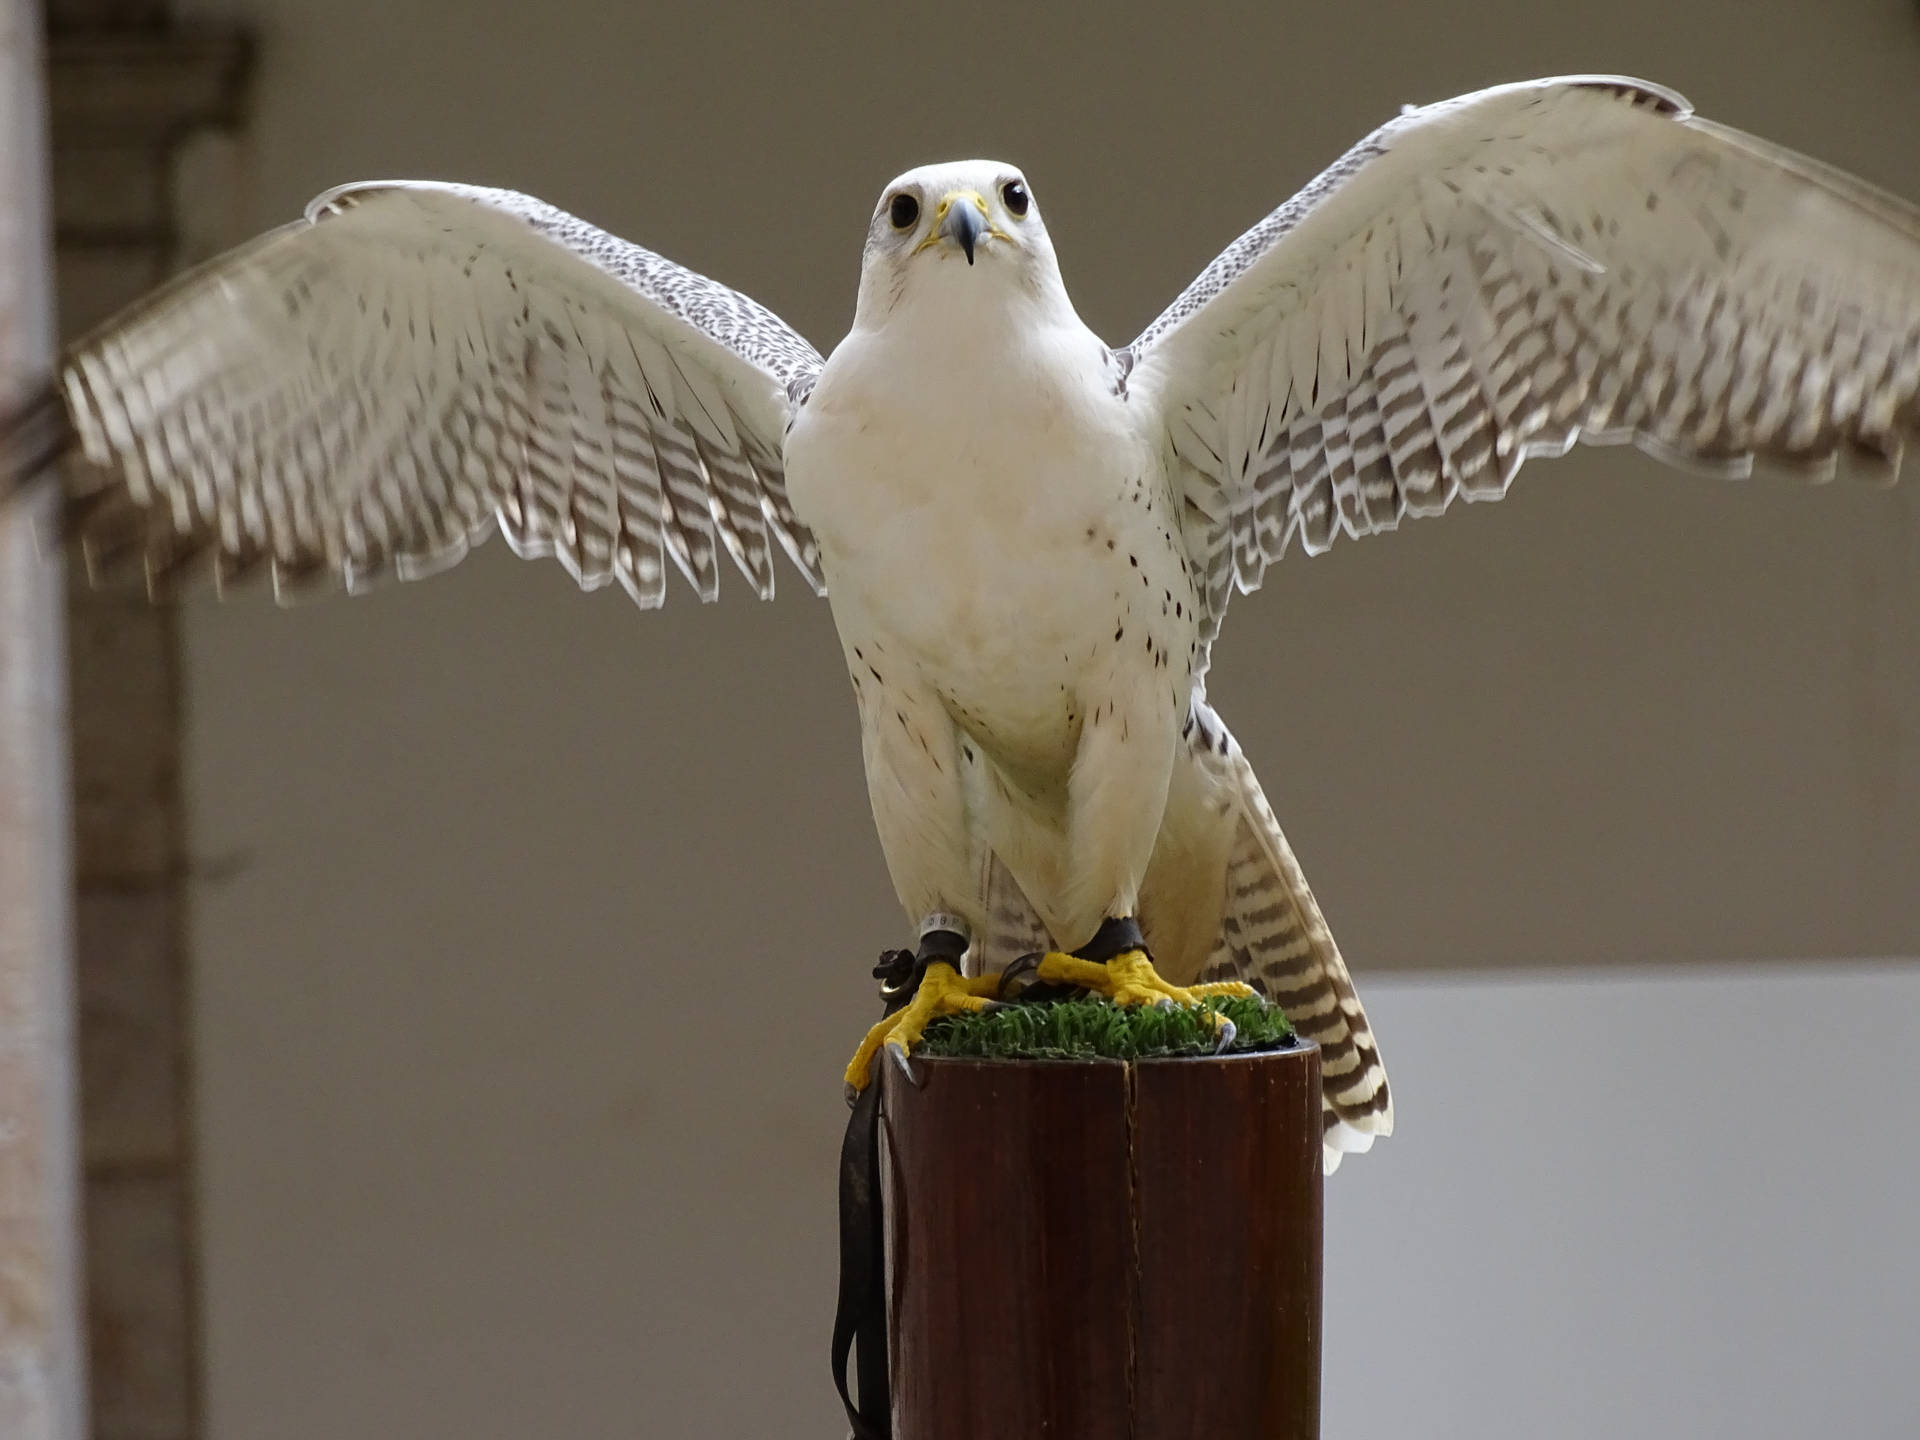 Caption: Majestic White Falcon Spreading Its Wings Wallpaper